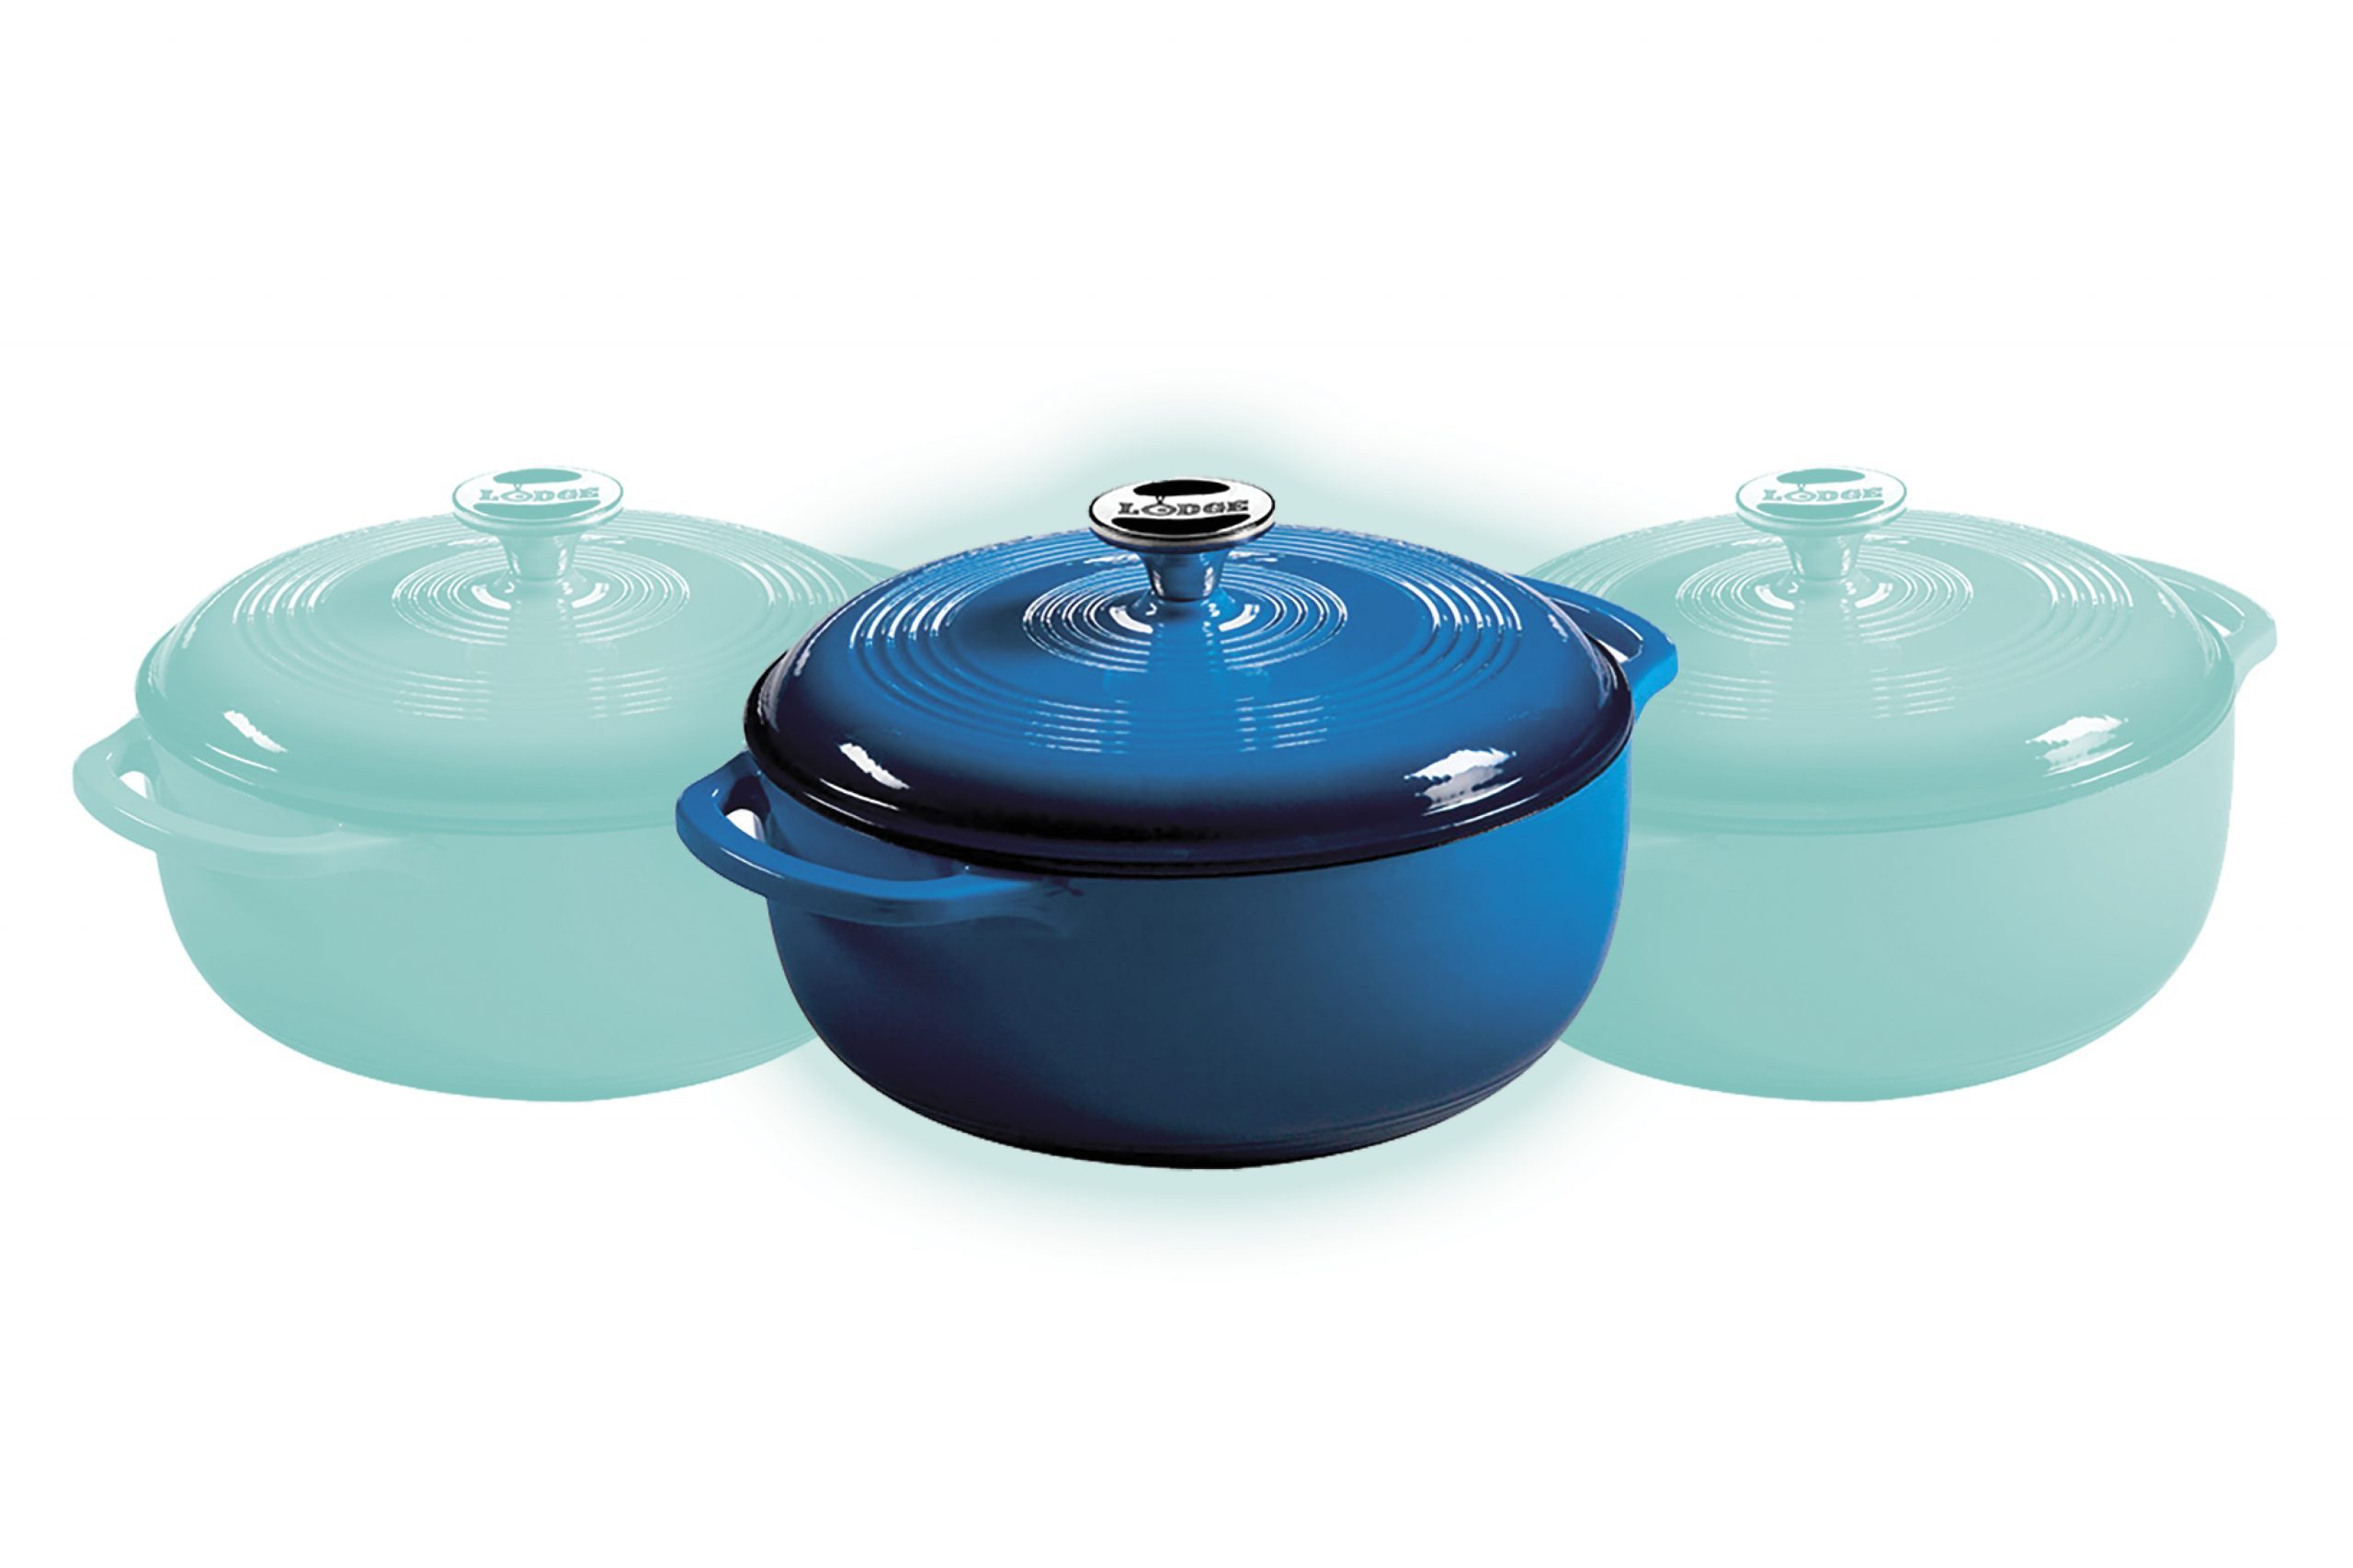  Cuisinart CI650-25BG Classic Enameled Iron Cookware, 5-Quart,  Provencal Blue: Cuisinart Dutch Oven: Home & Kitchen